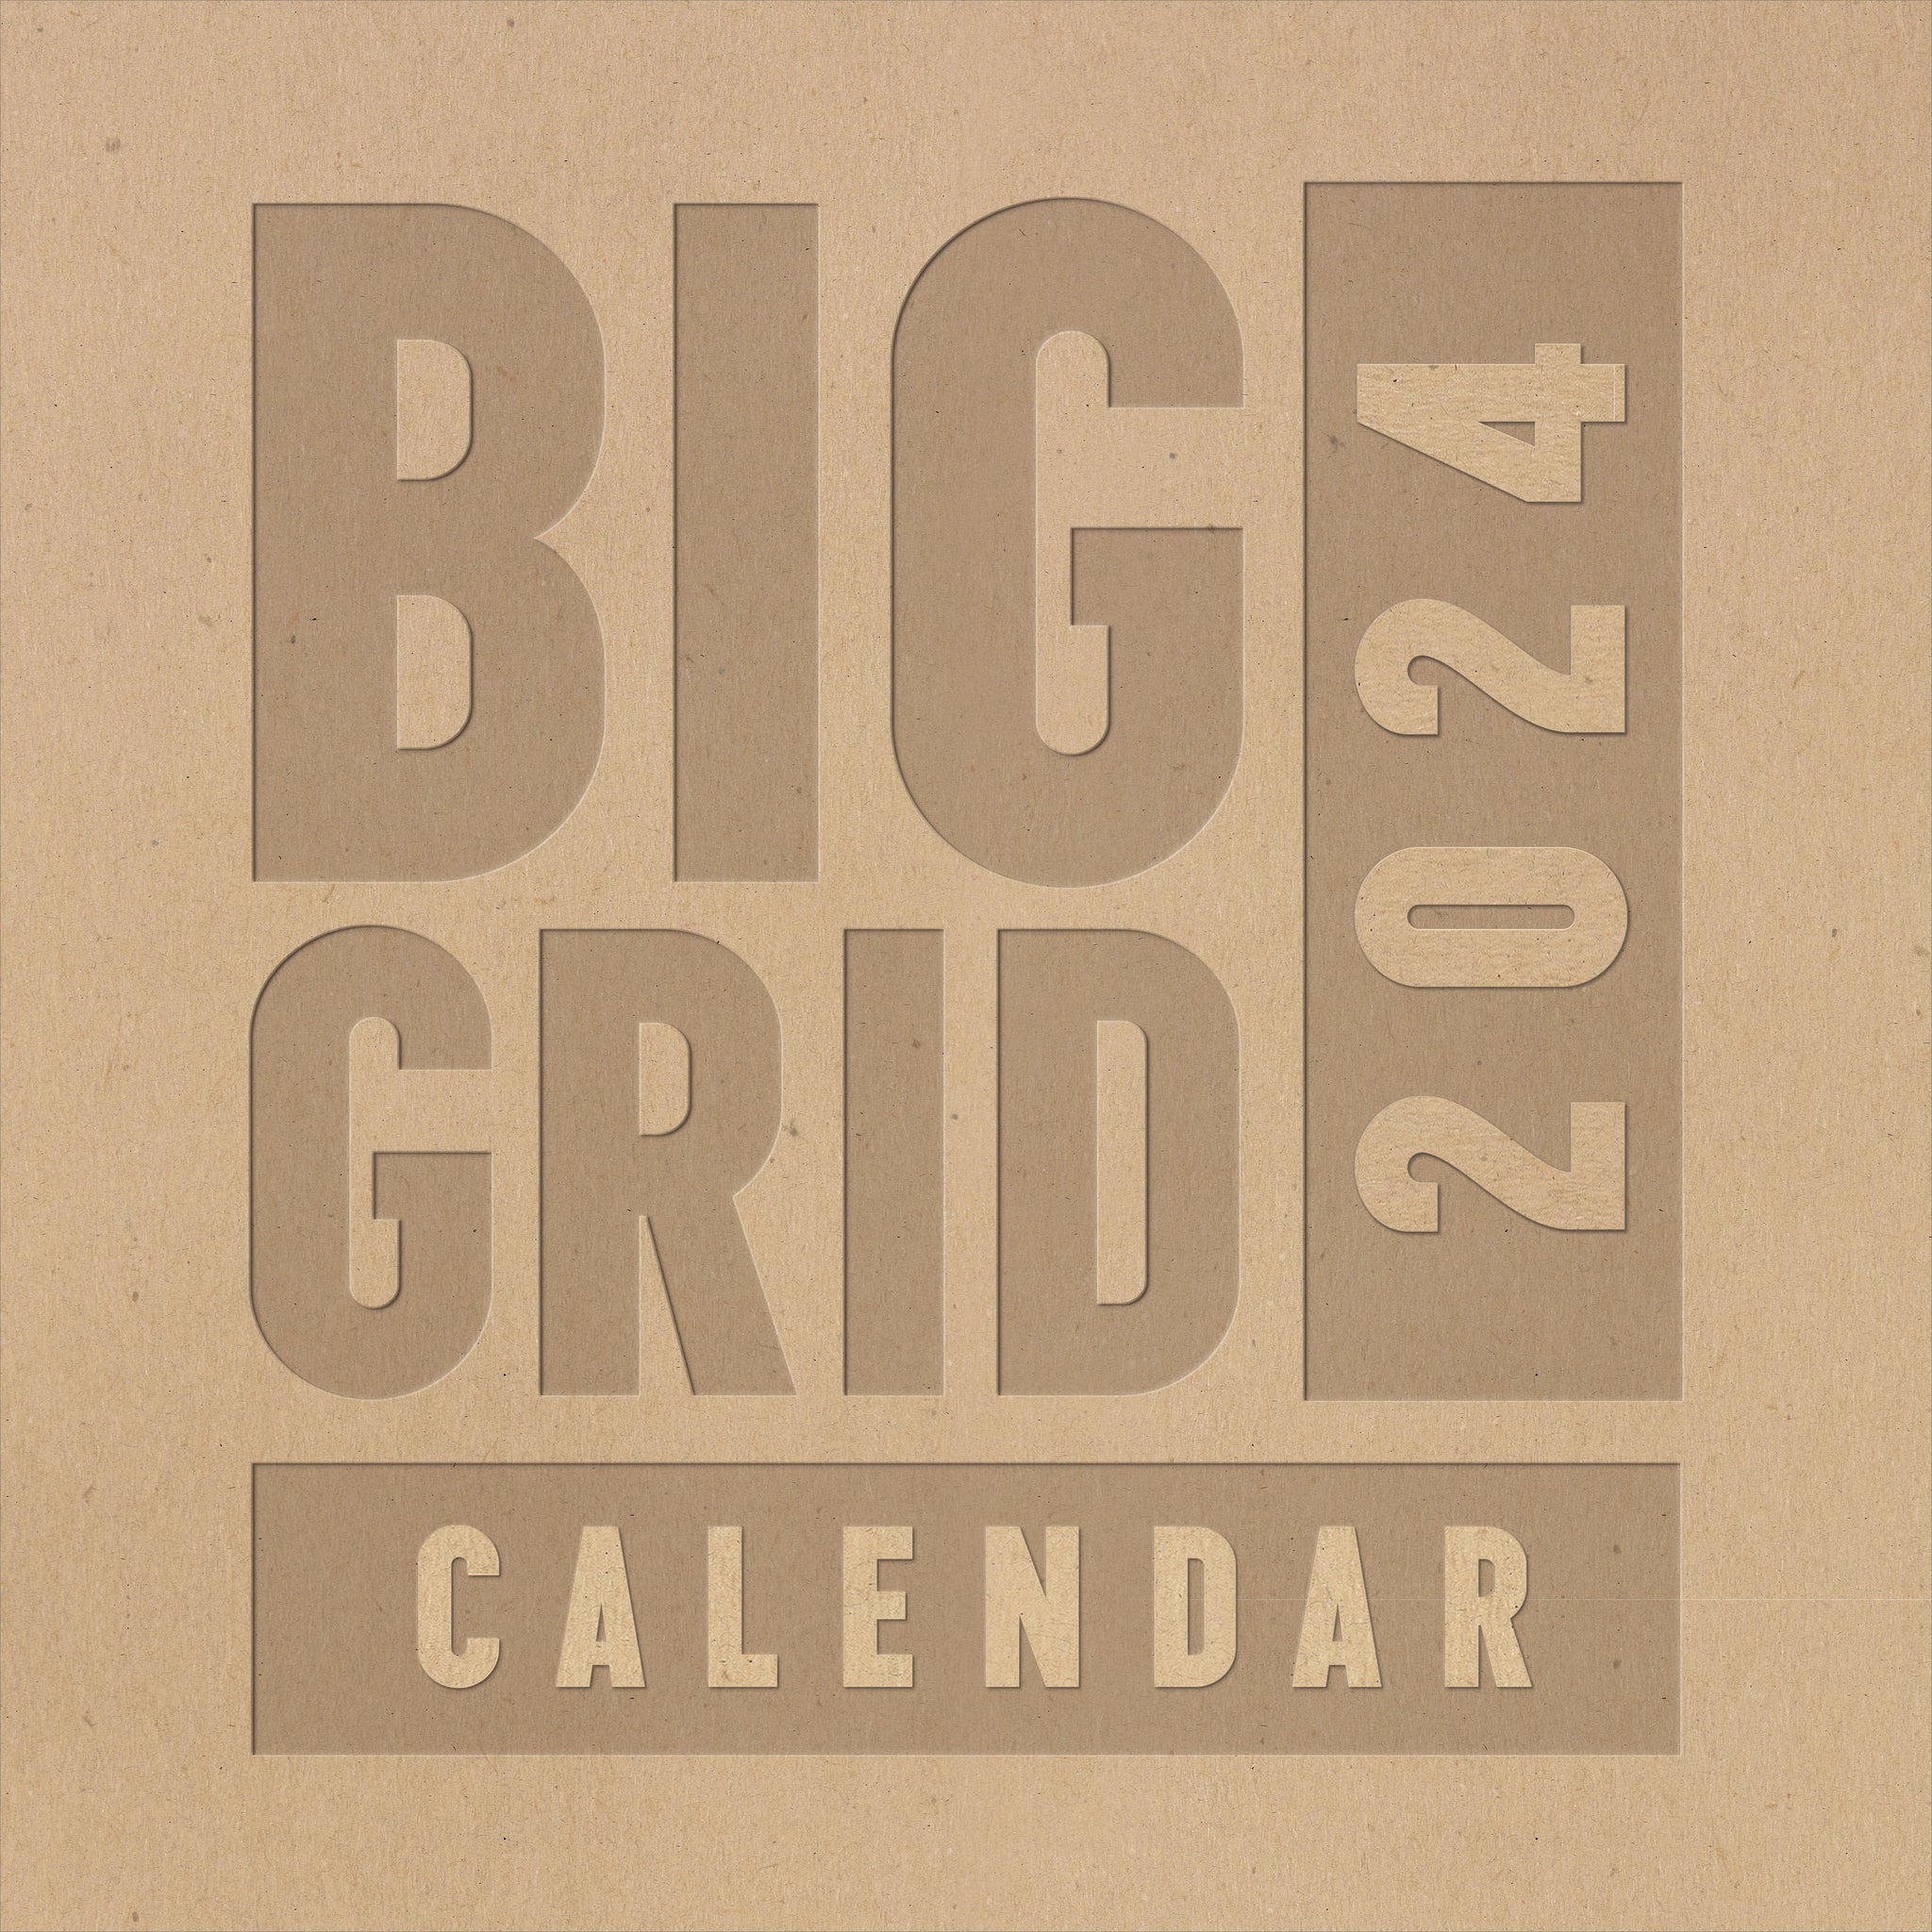 2024 Big Grid - Kraft - Square Wall Calendar